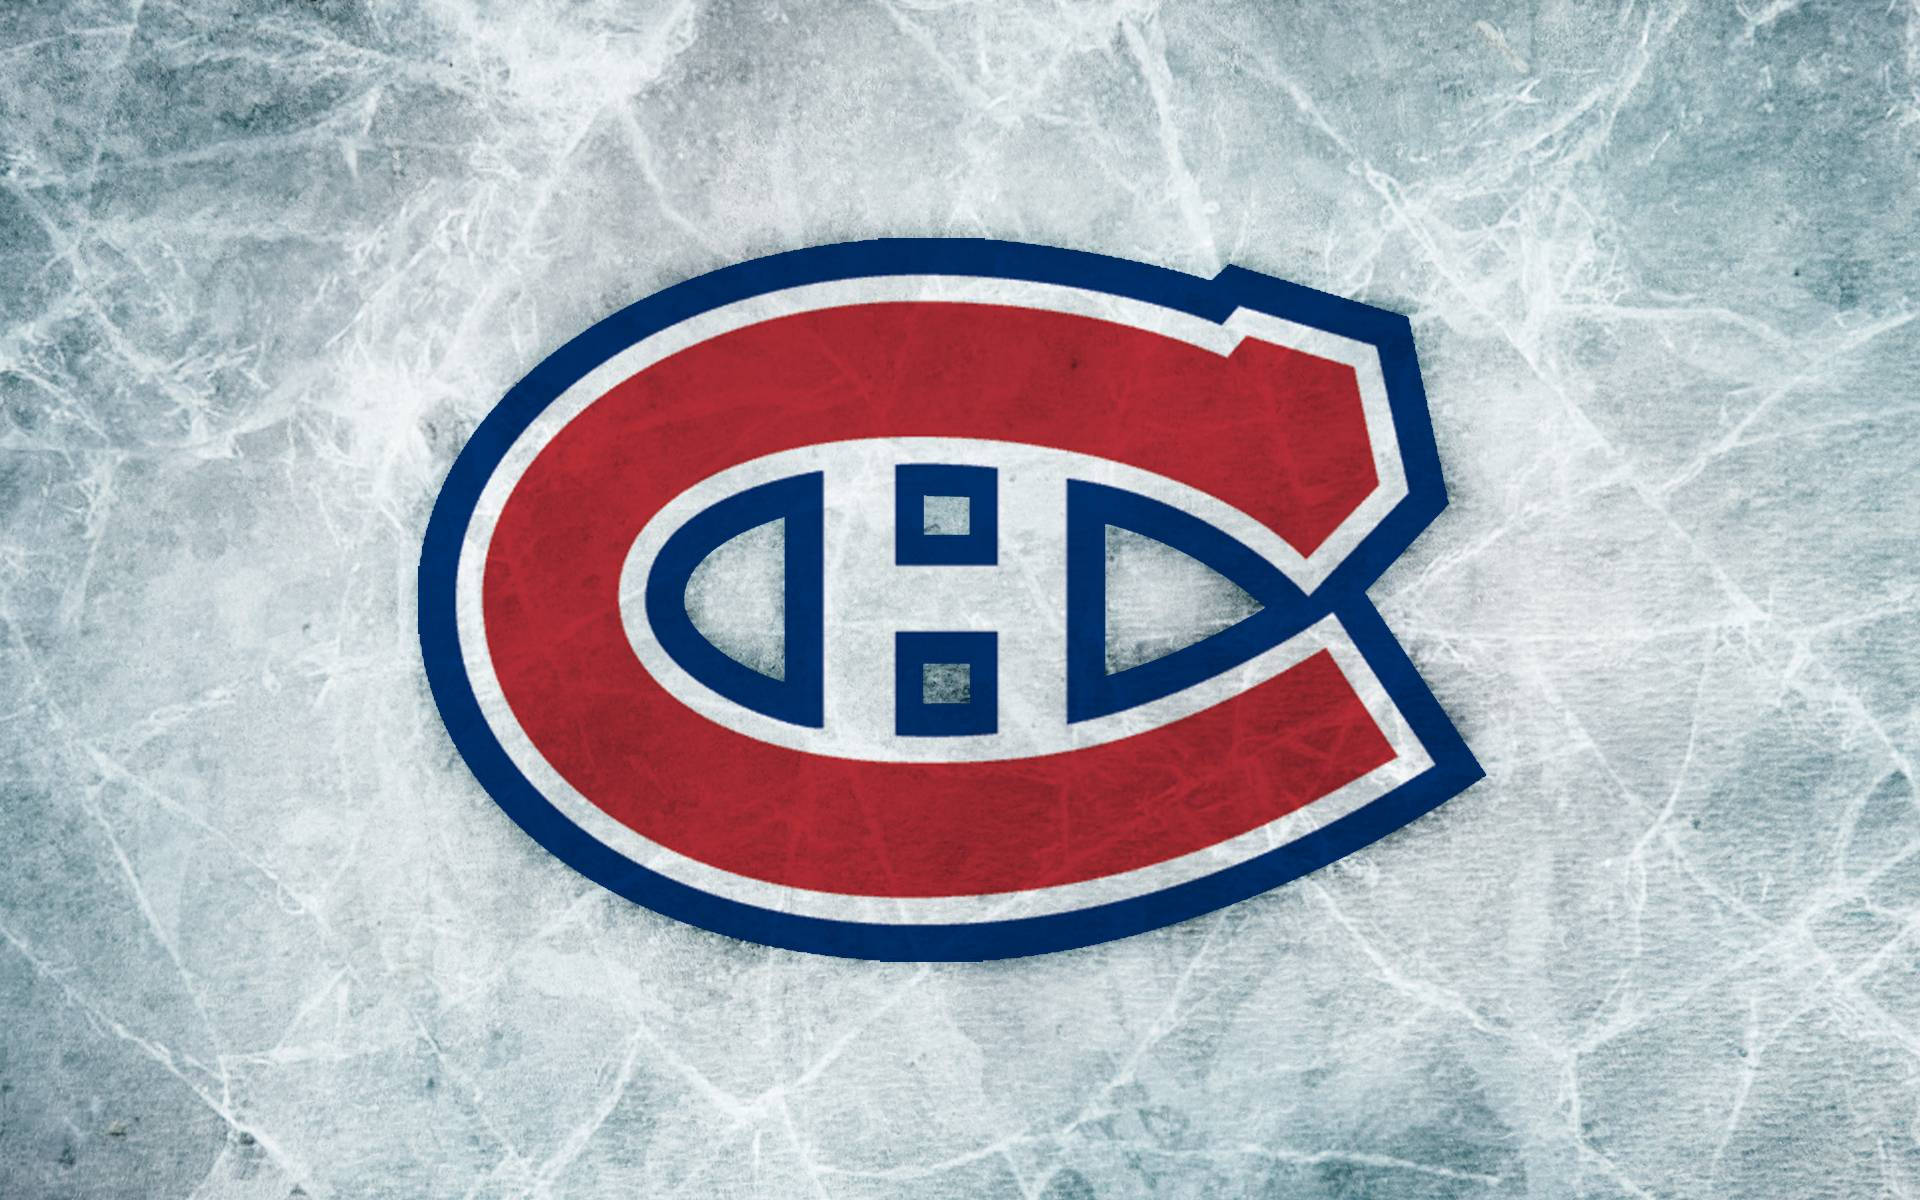 Montreal Canadiens Ice Hockey Team